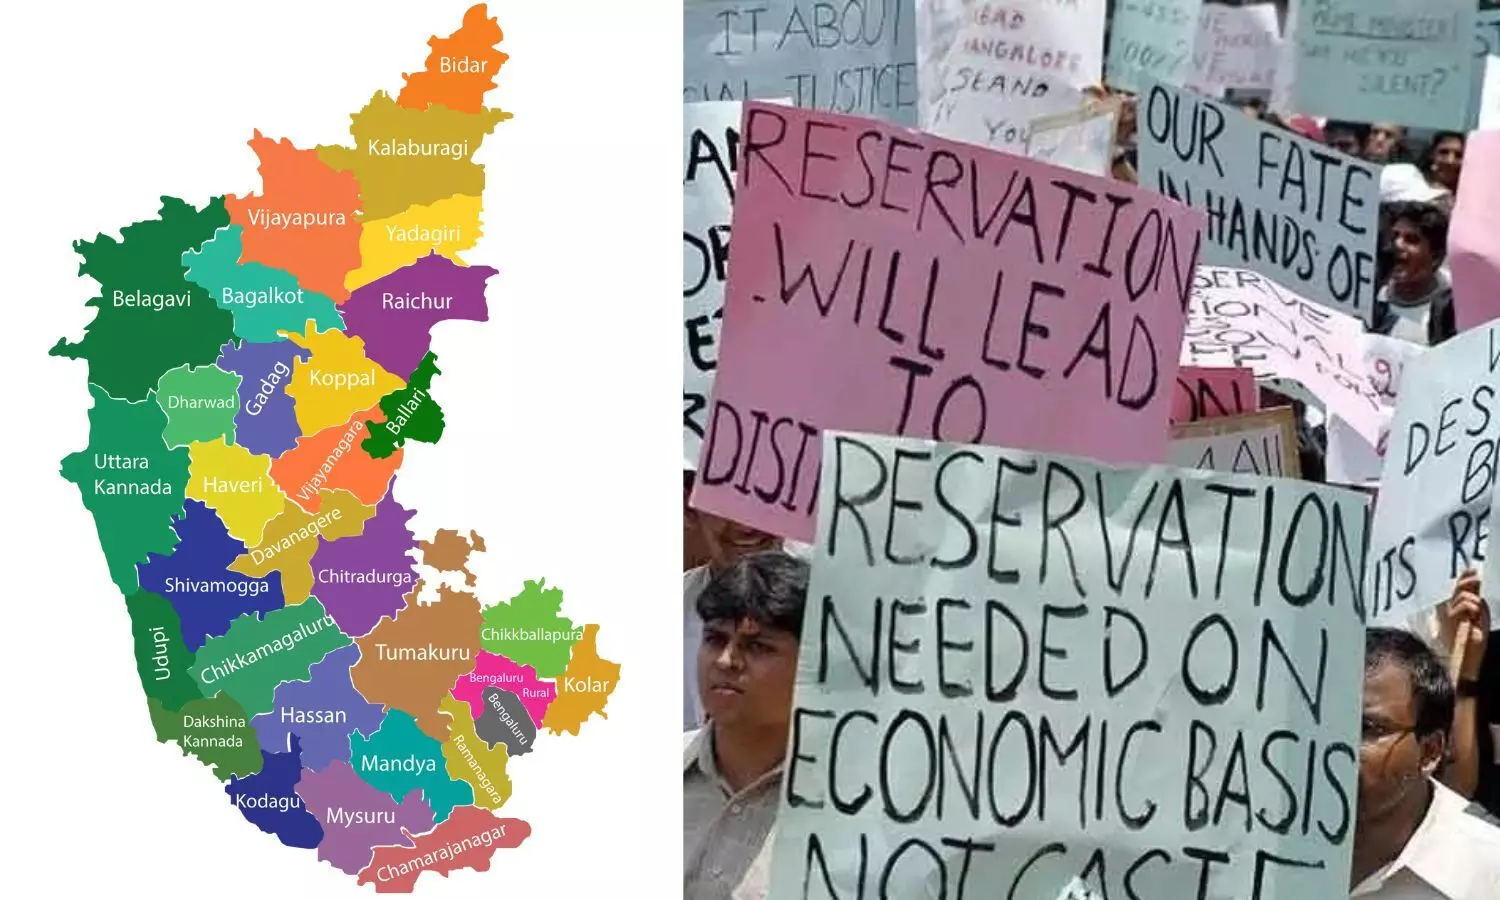 Karnataka Politics - The controversy surrounding caste quotas